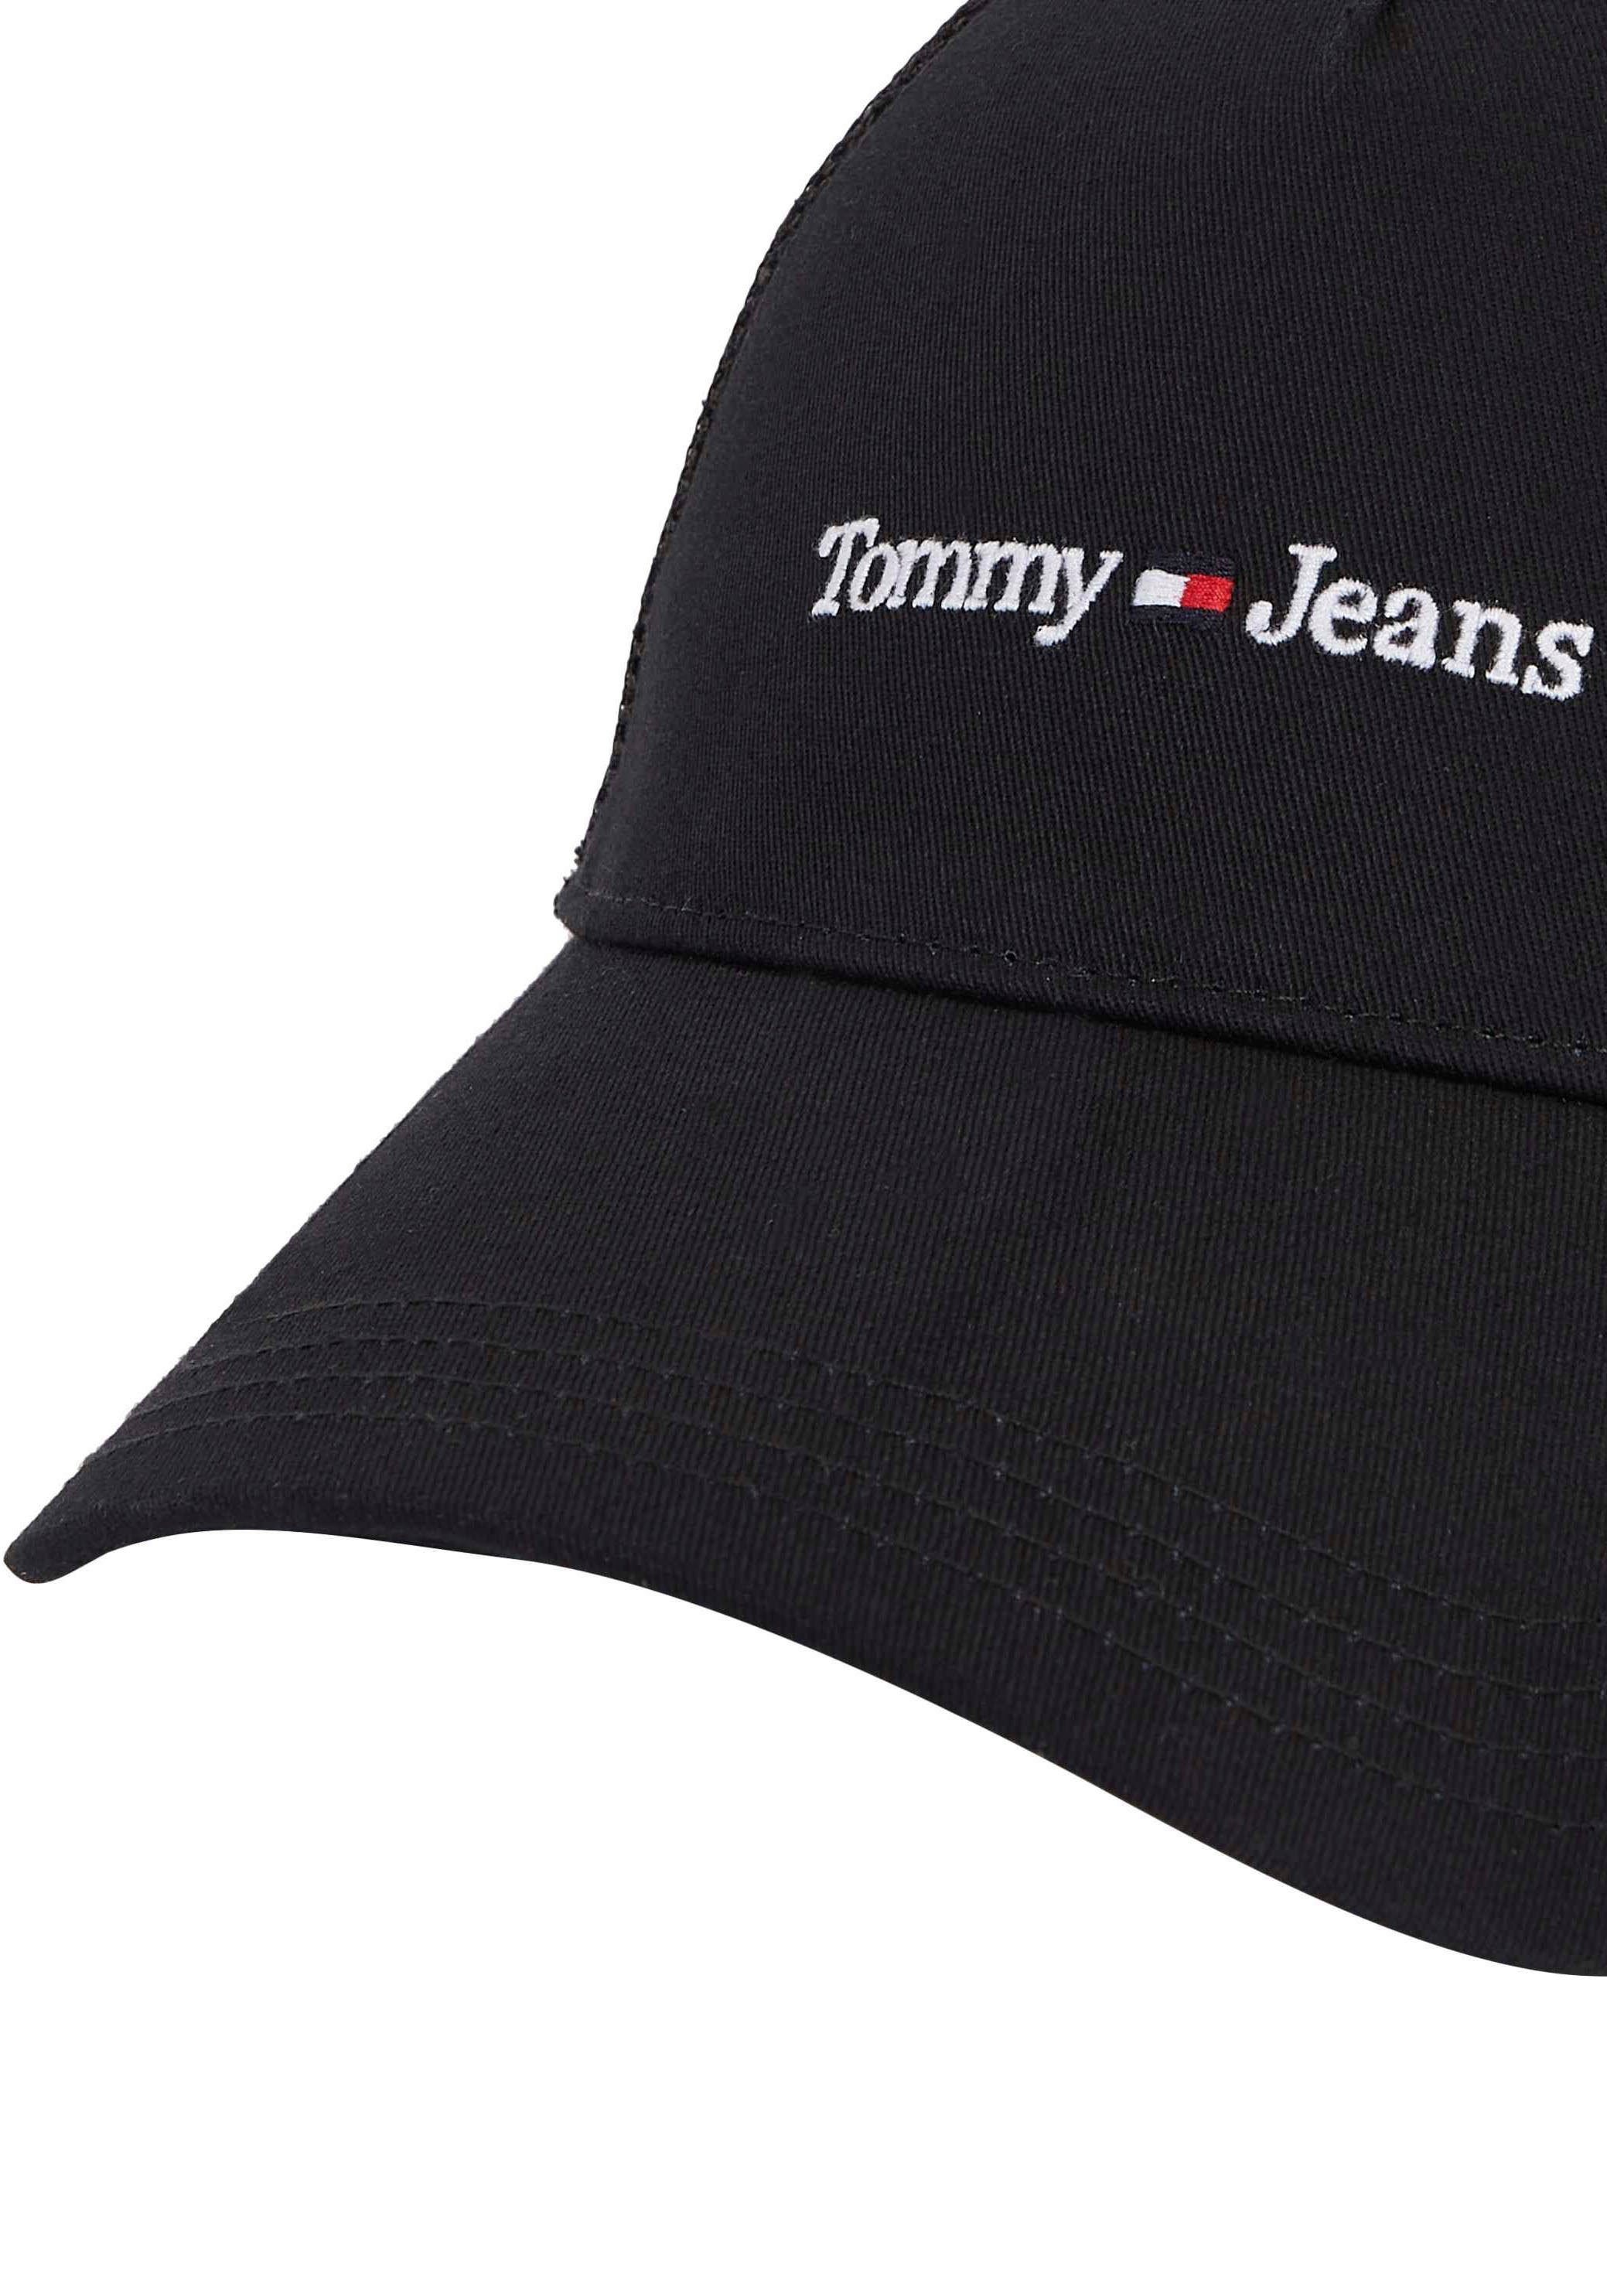 Jeans TJM SPORT CAP gesticktem Label Tommy Jeans Baseball Black Tommy Cap mit TRUCKER